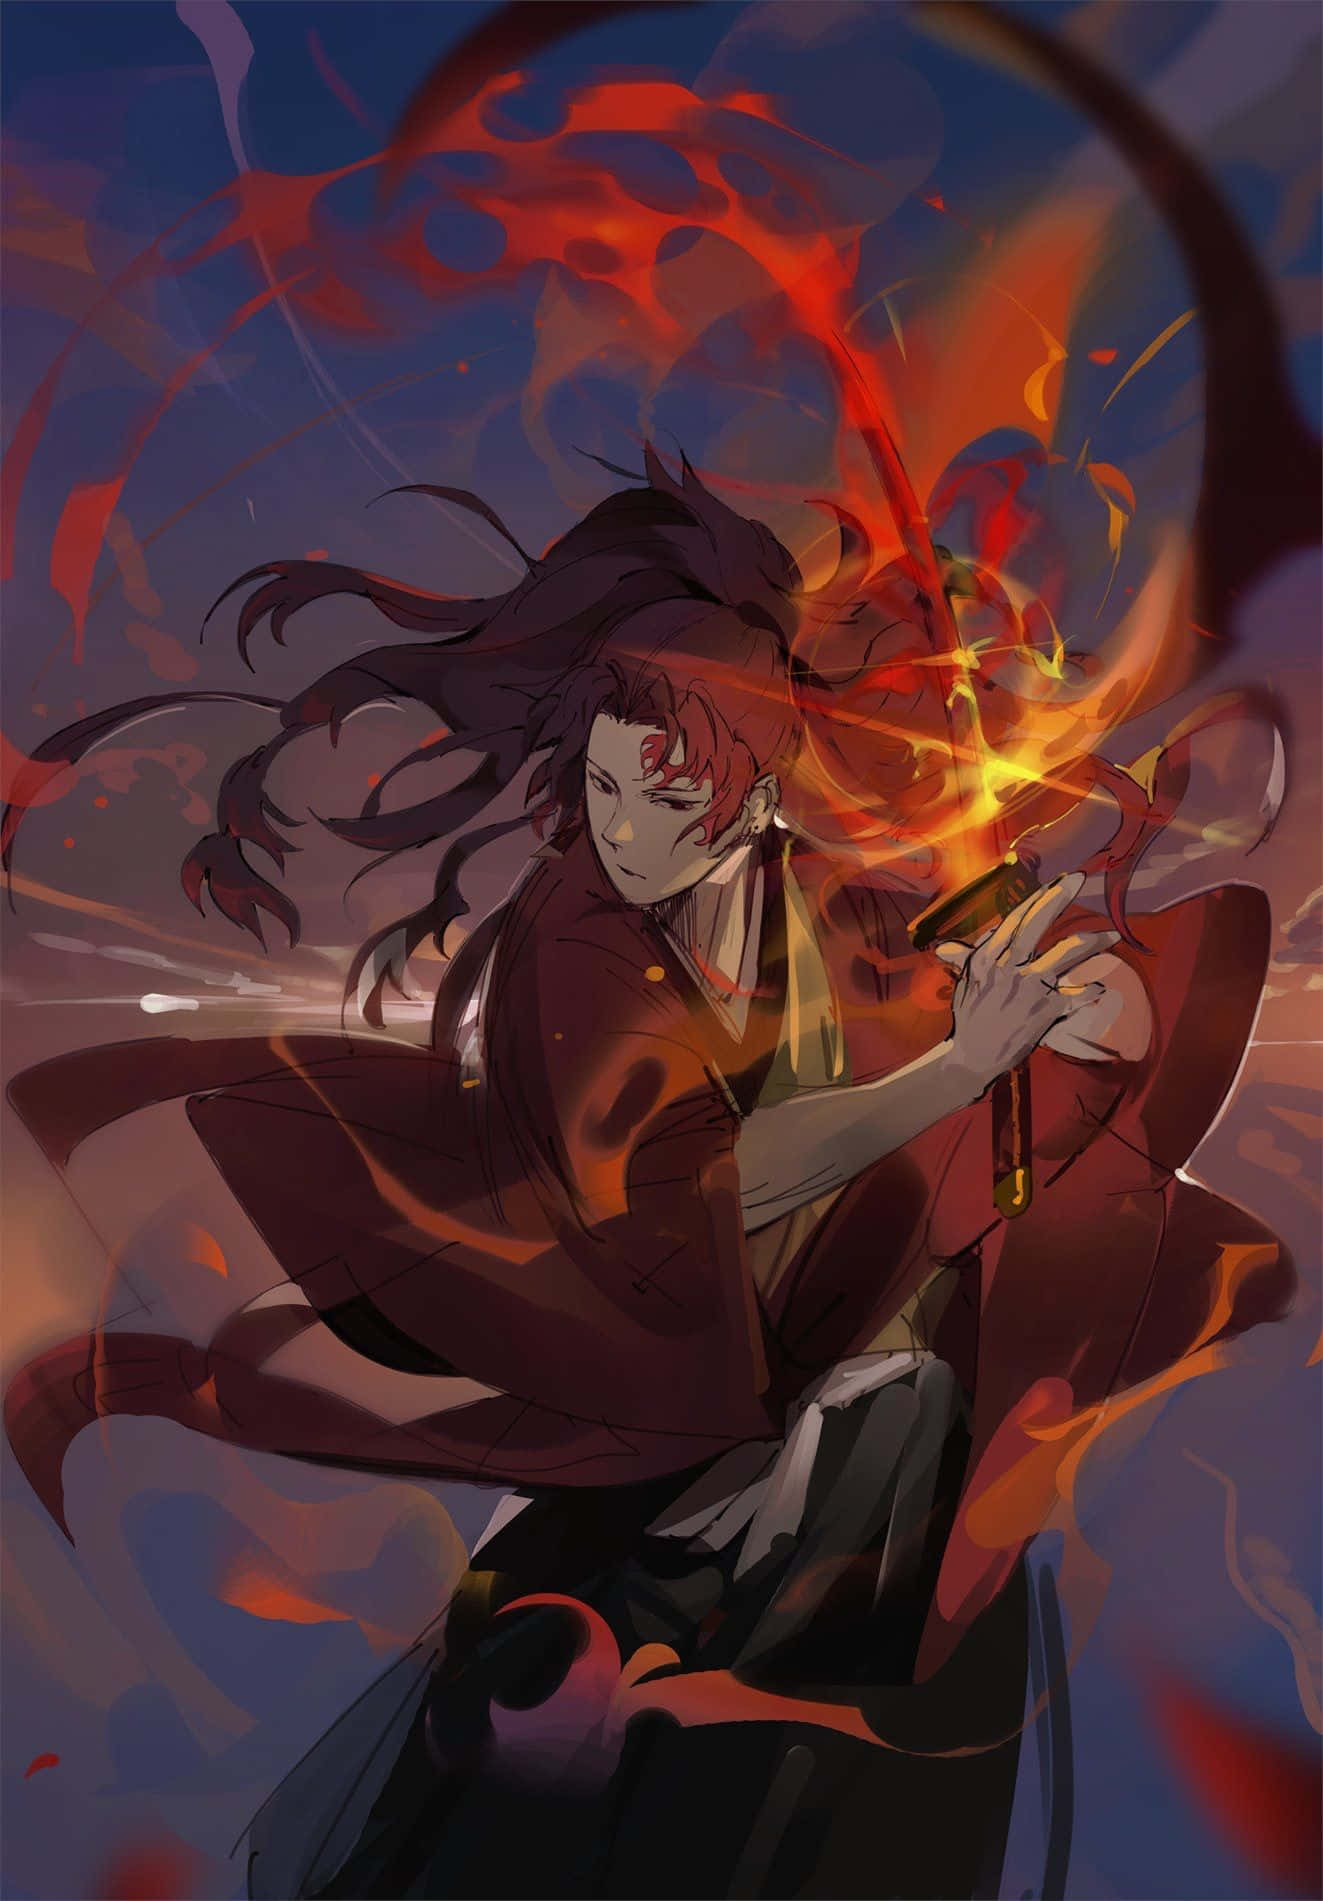 Yoriichi Tsugikuni, the legendary swordsman and master of the "Breath of the Gods" Wallpaper